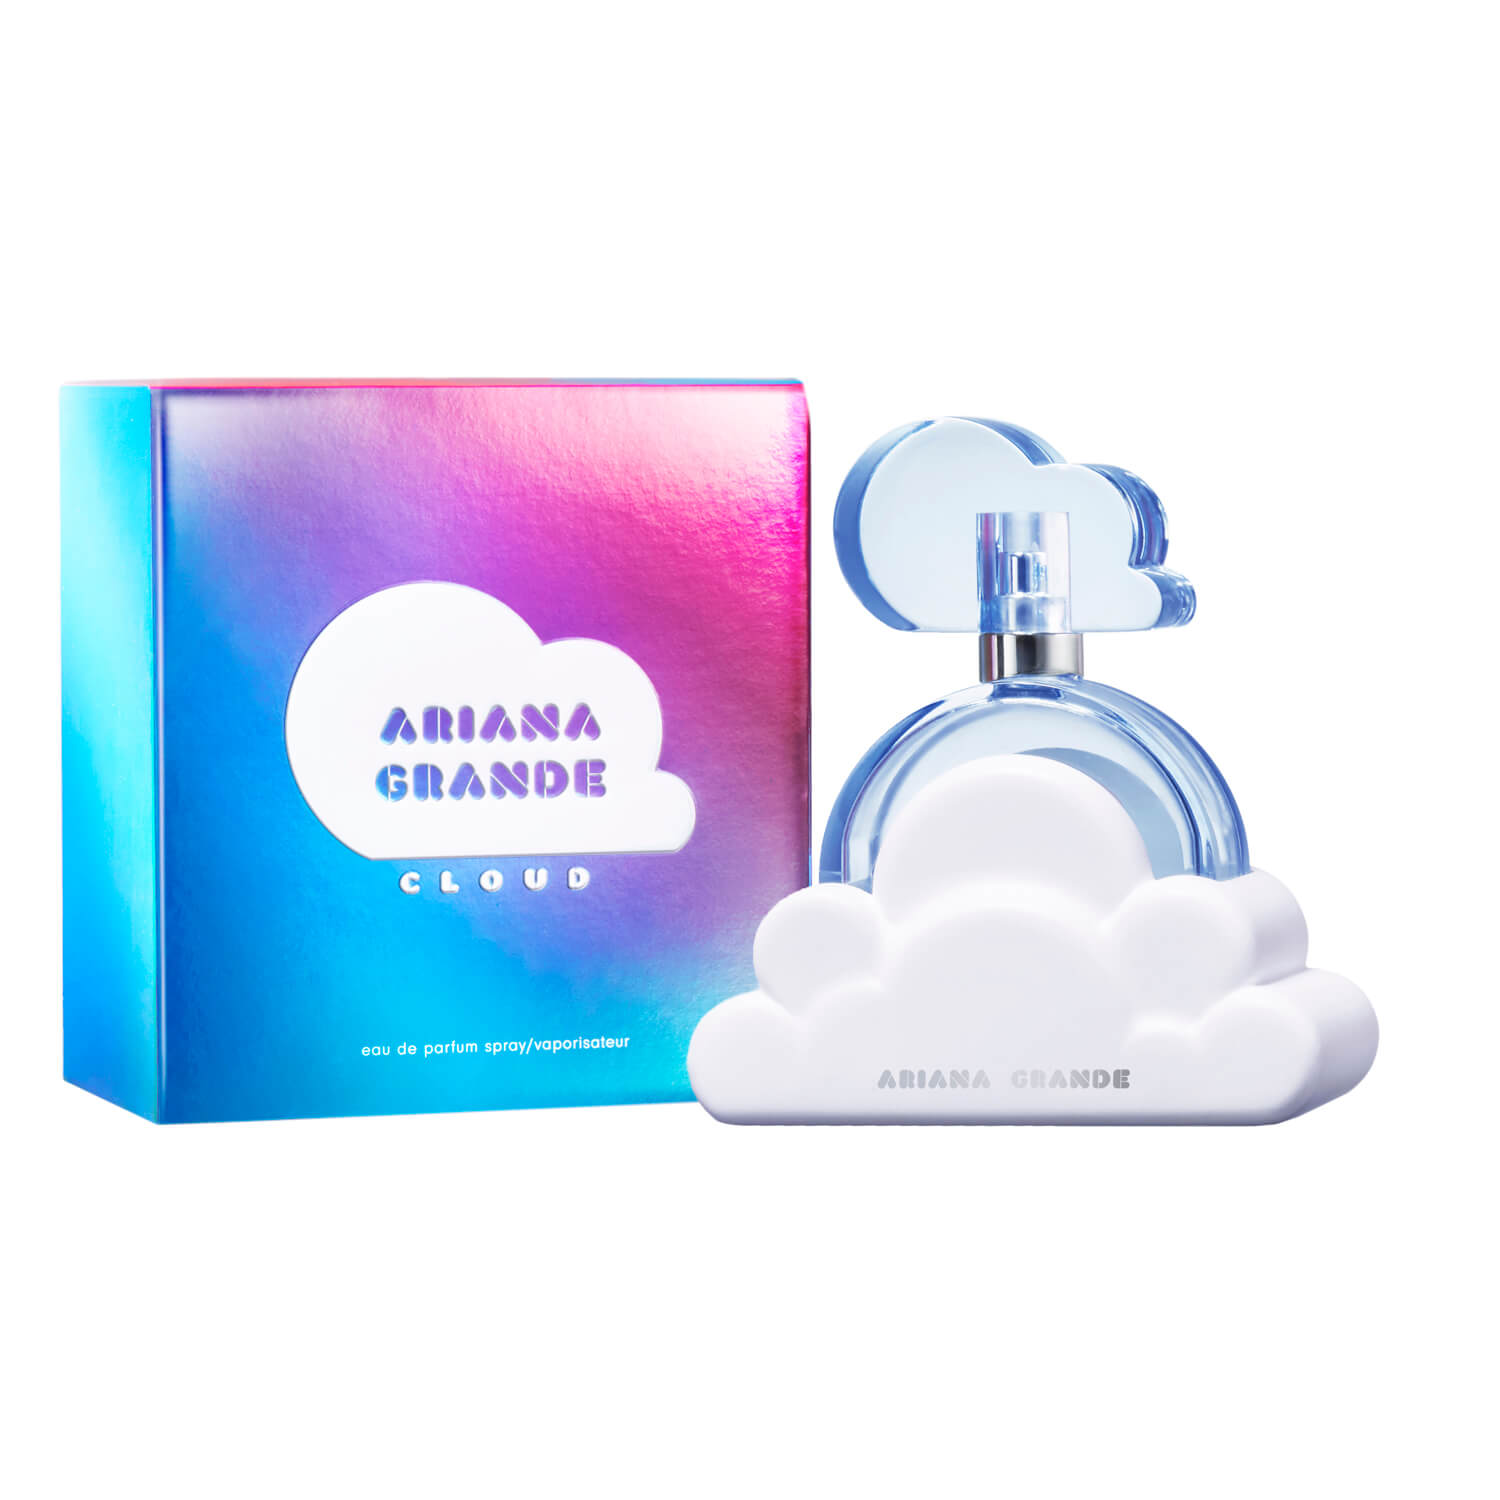 Ariana Grande Cloud Eau de parfum 2 Shaws Department Stores